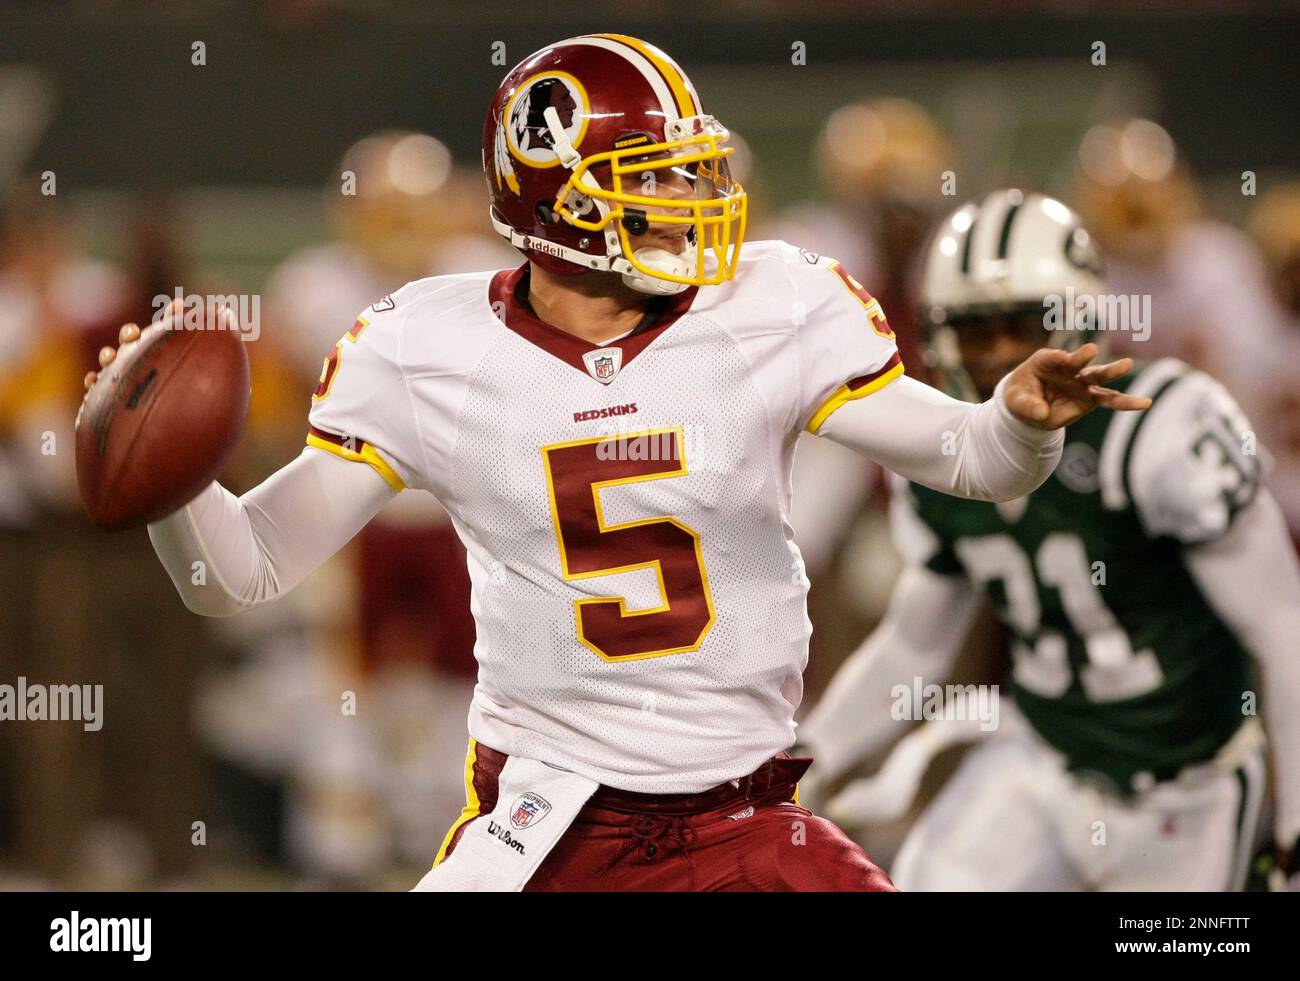 16 August 2008: Washington Redskins quarterback Colt Brennan (5